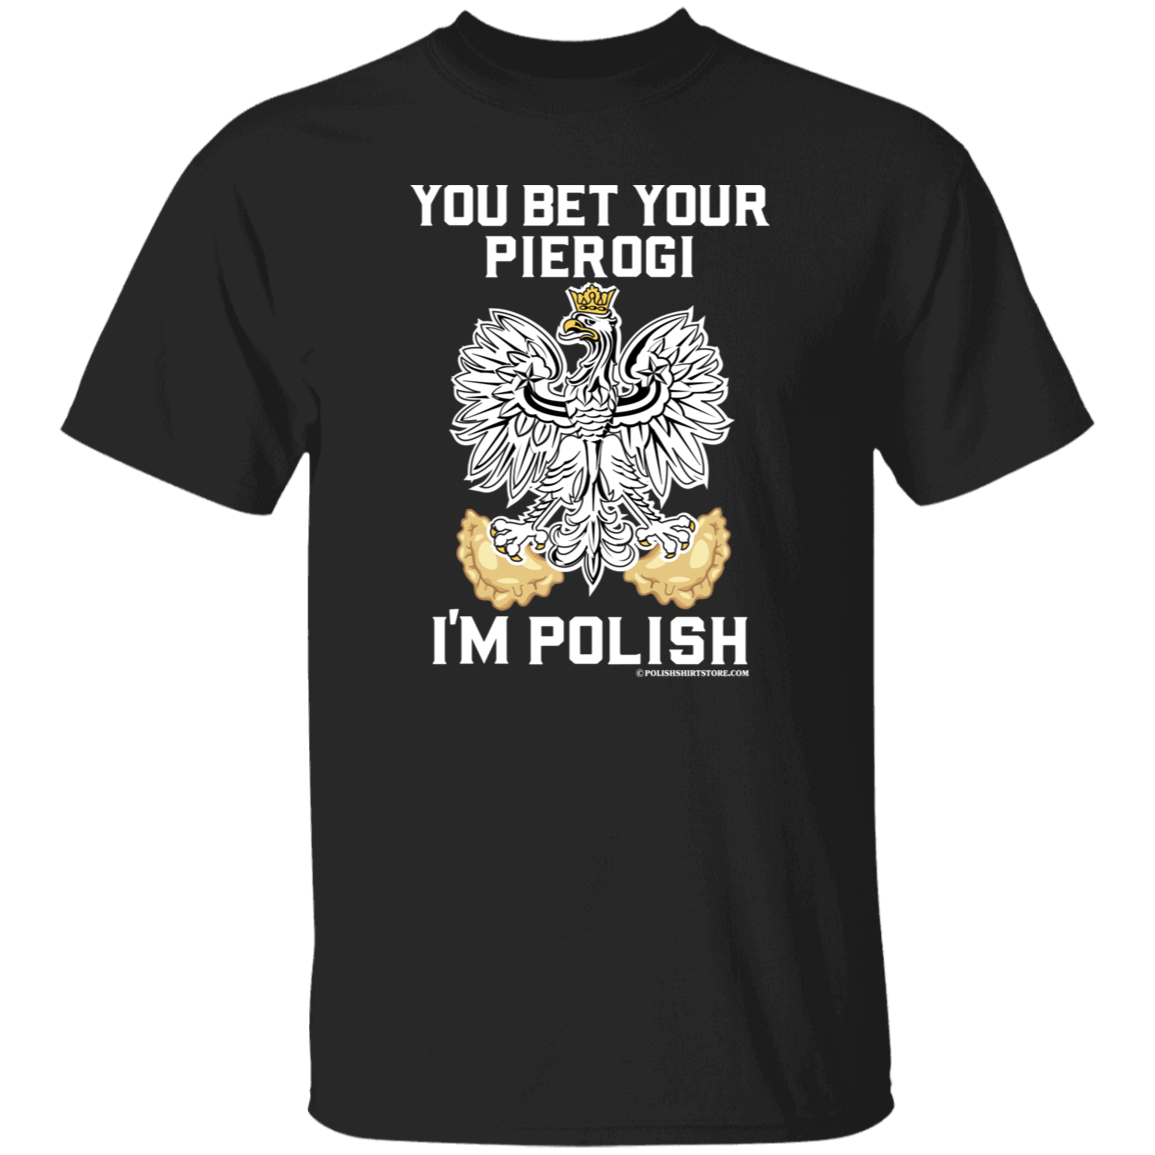 You Bet Your Pierogi I'm Polish Apparel CustomCat G500 5.3 oz. T-Shirt Black S